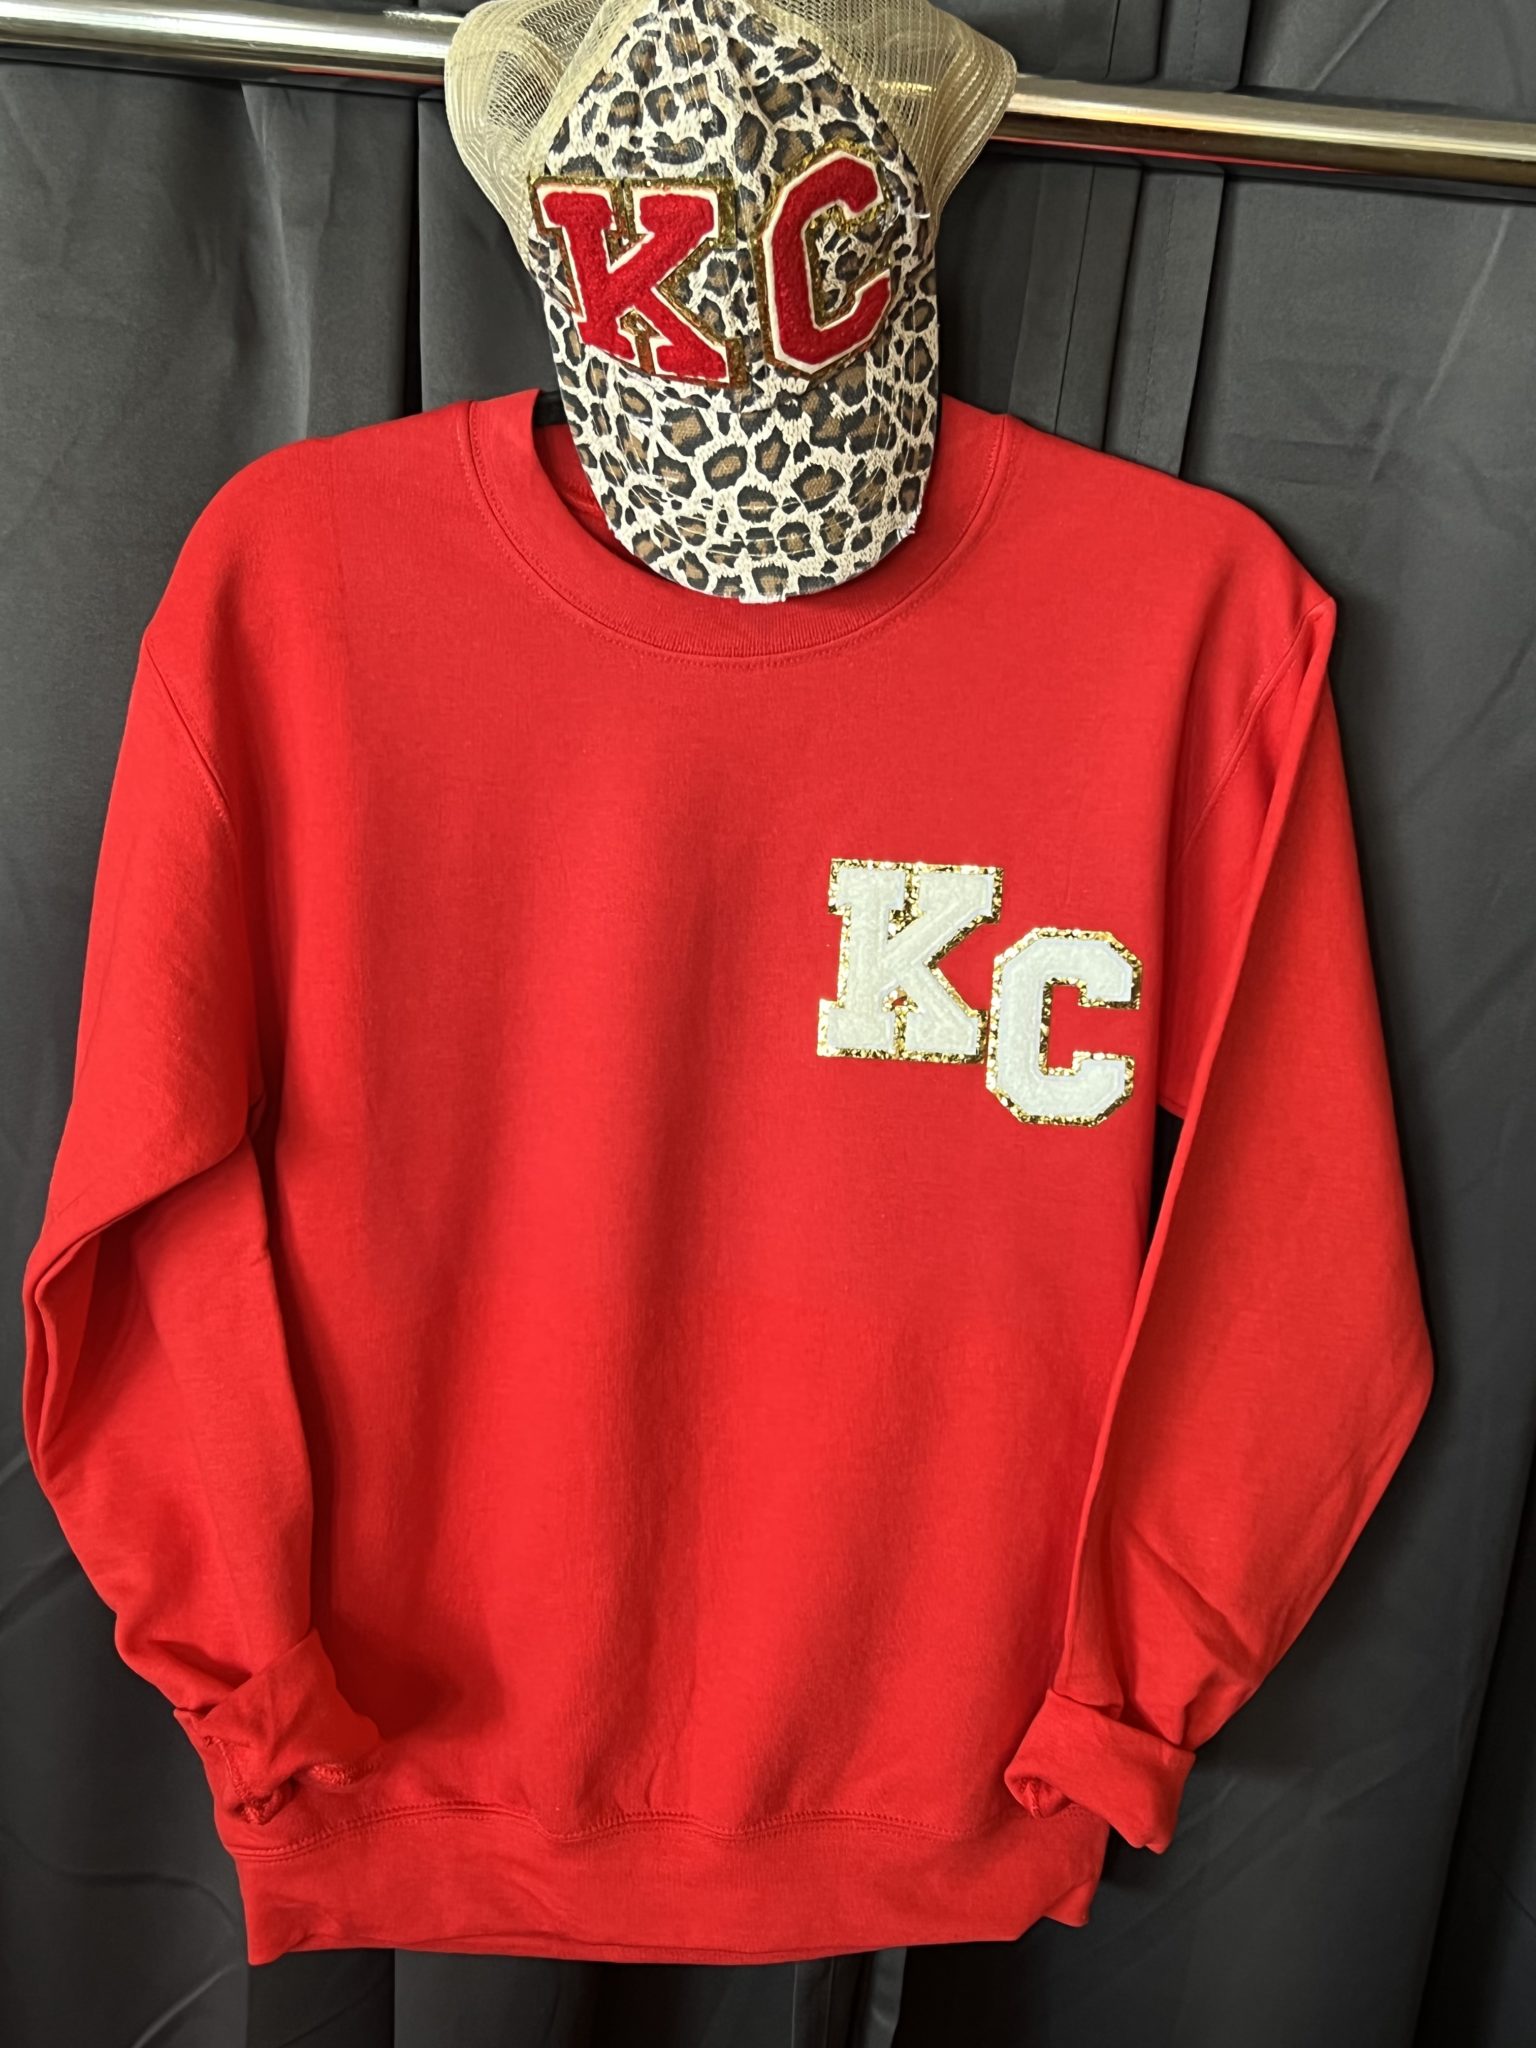 KC Chiefs red Sweatshirt  Wicked Stitch - Wichita, Kansas